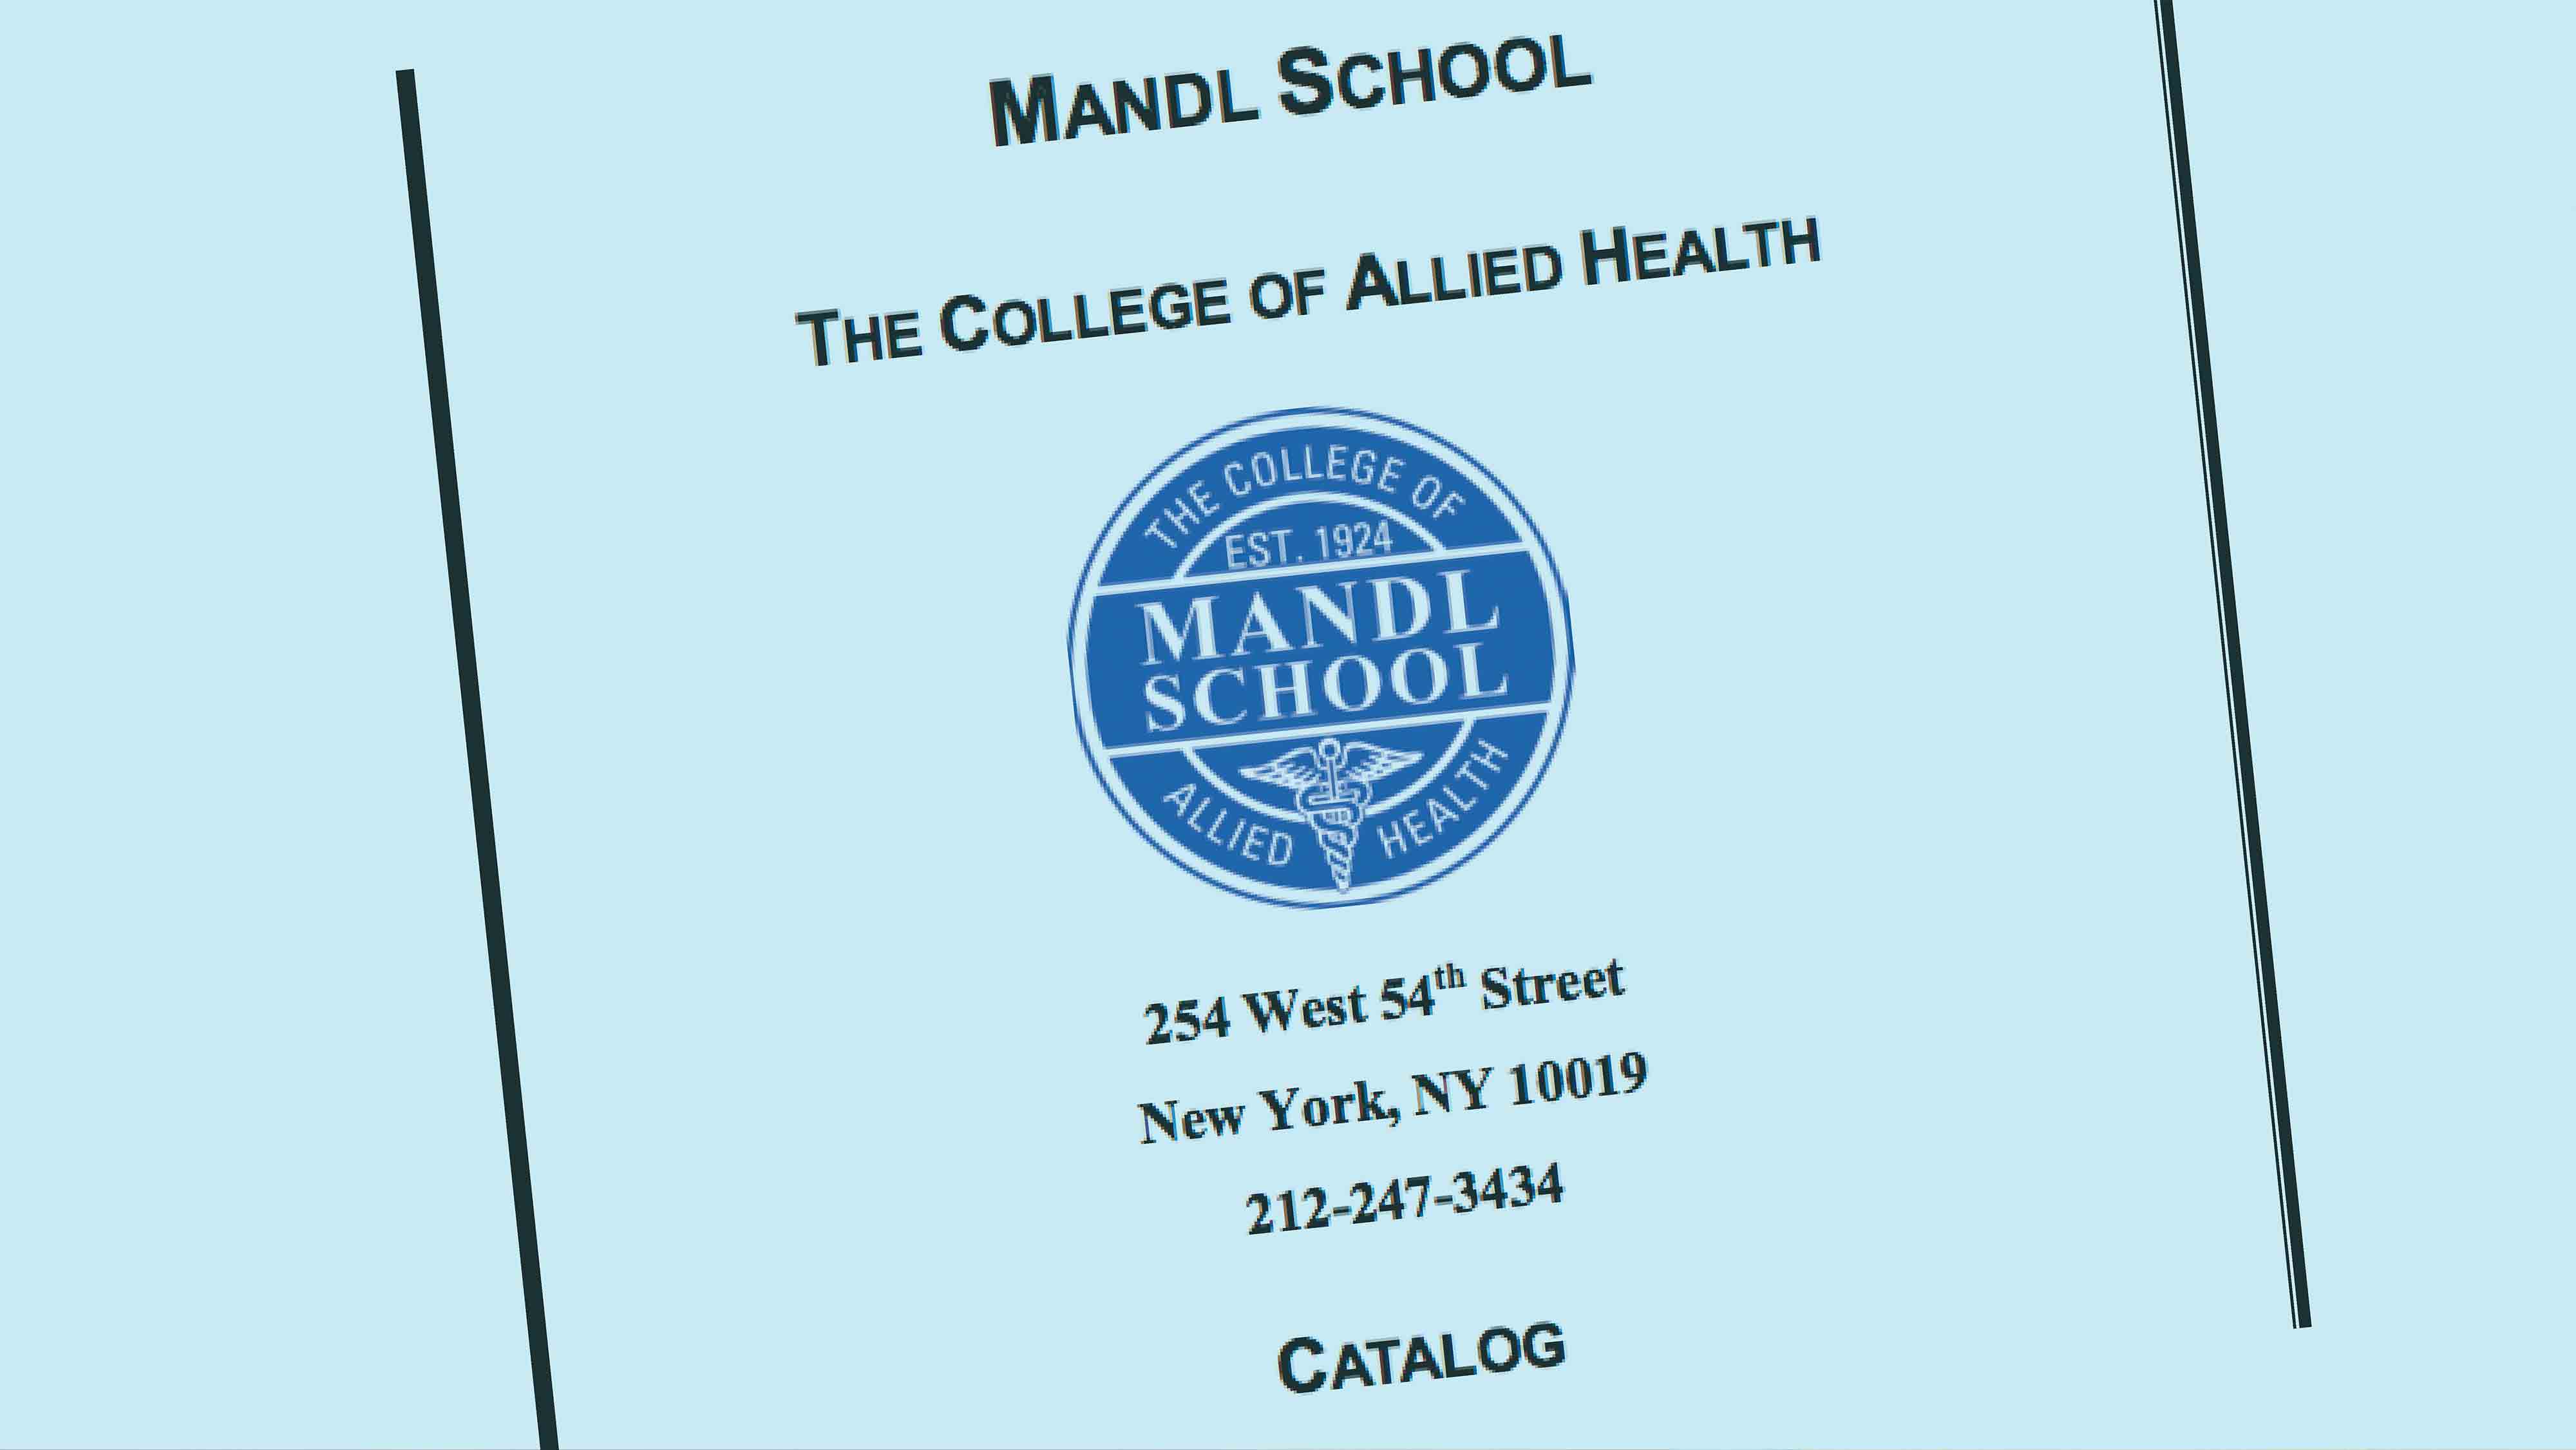 Mandl School Catalog cover